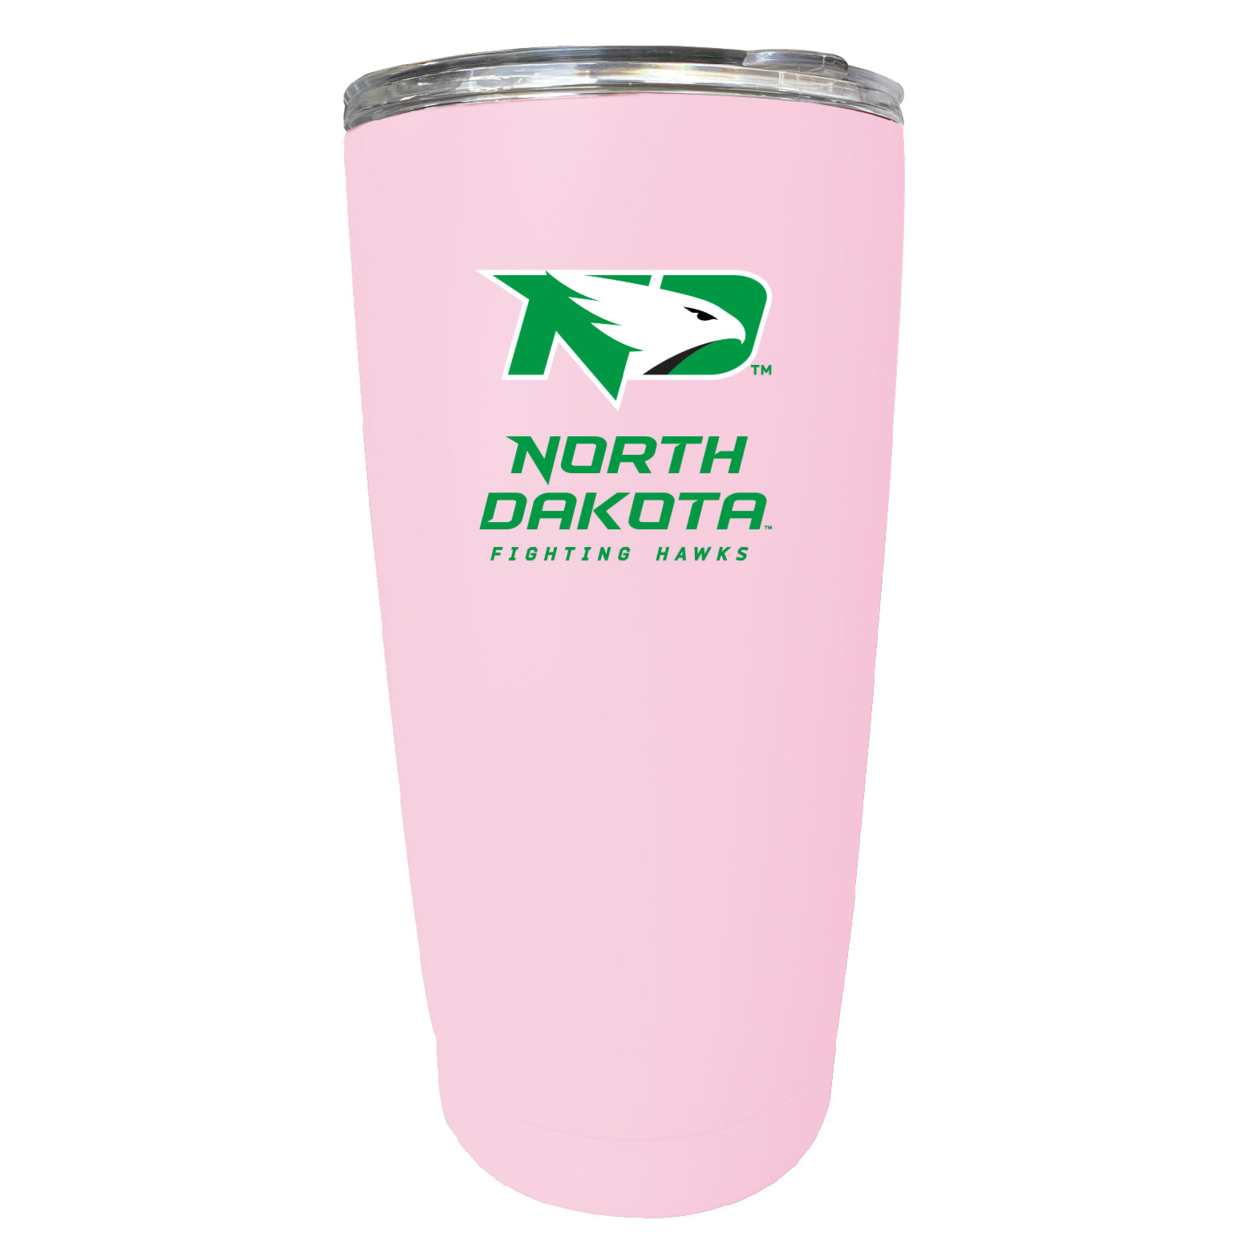 North Dakota Fighting Hawks 16 Oz Stainless Steel Insulated Tumbler - Pink